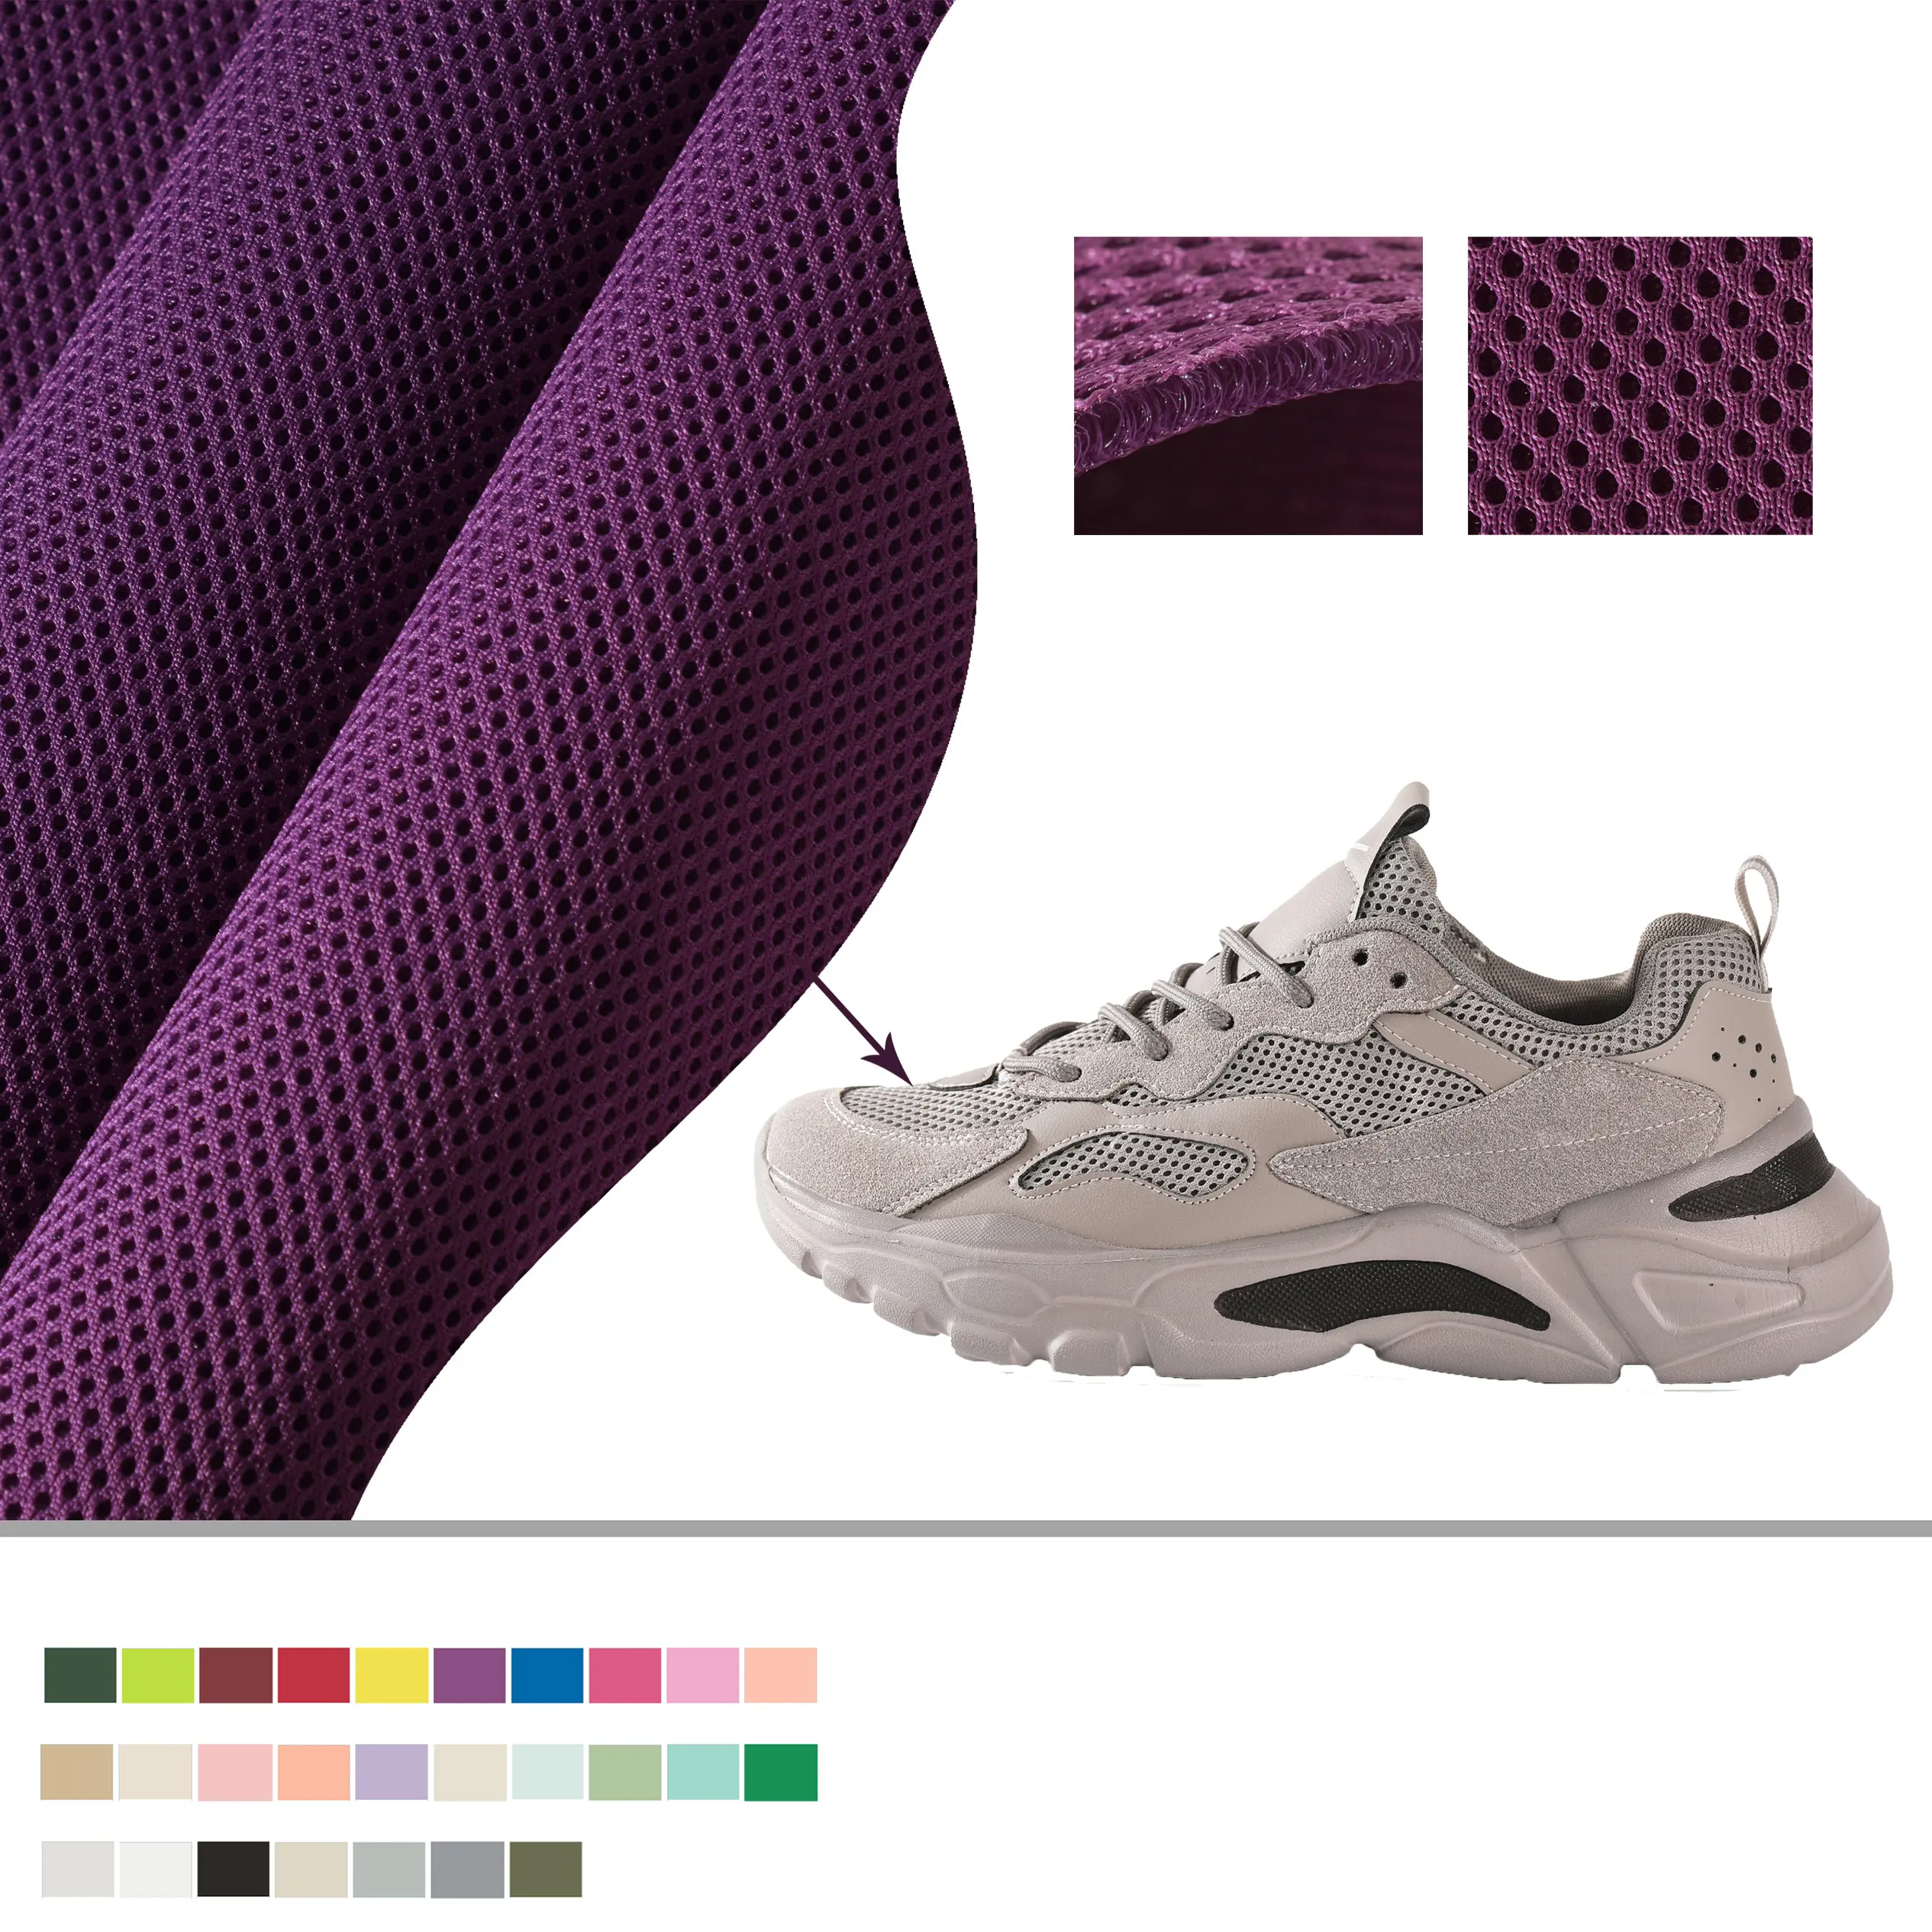 KOYEE Custom 15d Polyester faser Textilgewebe Großhandel 3D Air Mesh Sandwich Vlies gewebe für Schuh oberteile